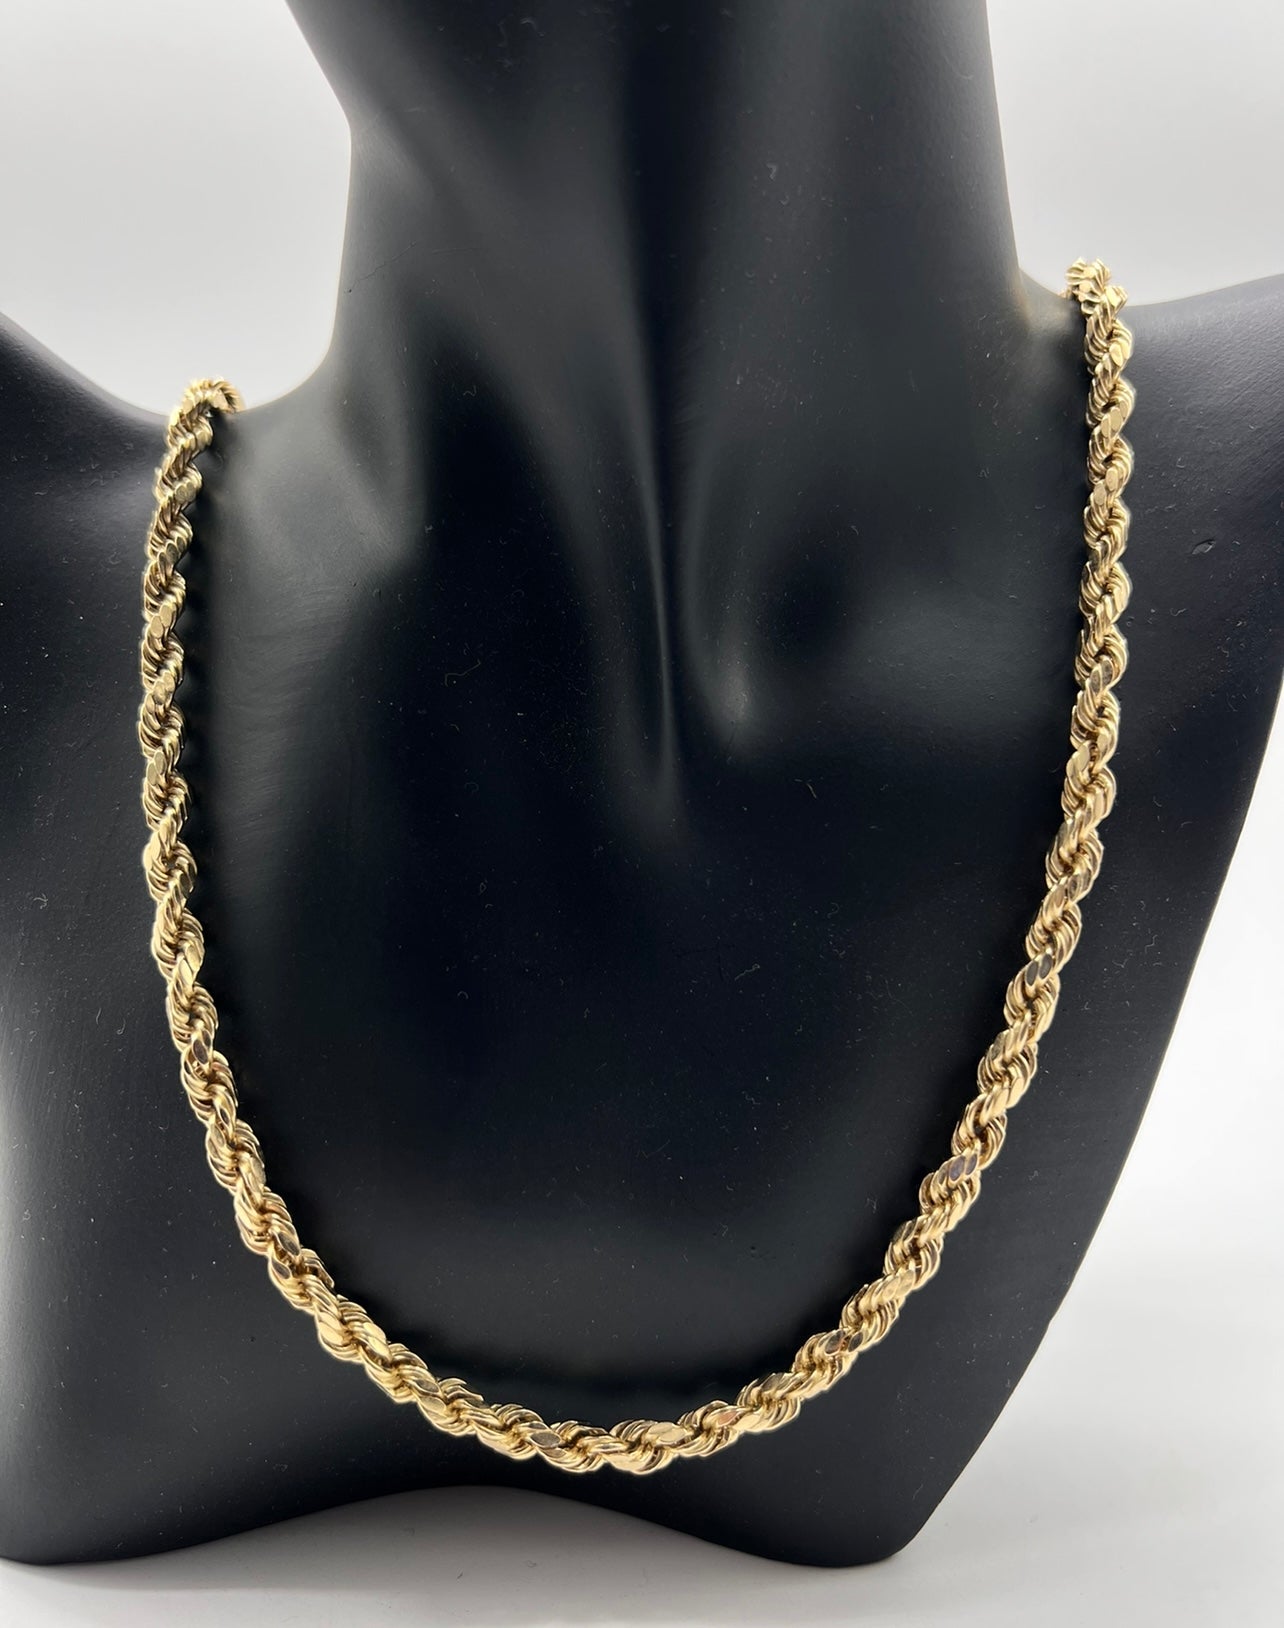 6mm 14k Real gold Rope Chain – LaModaJewelry